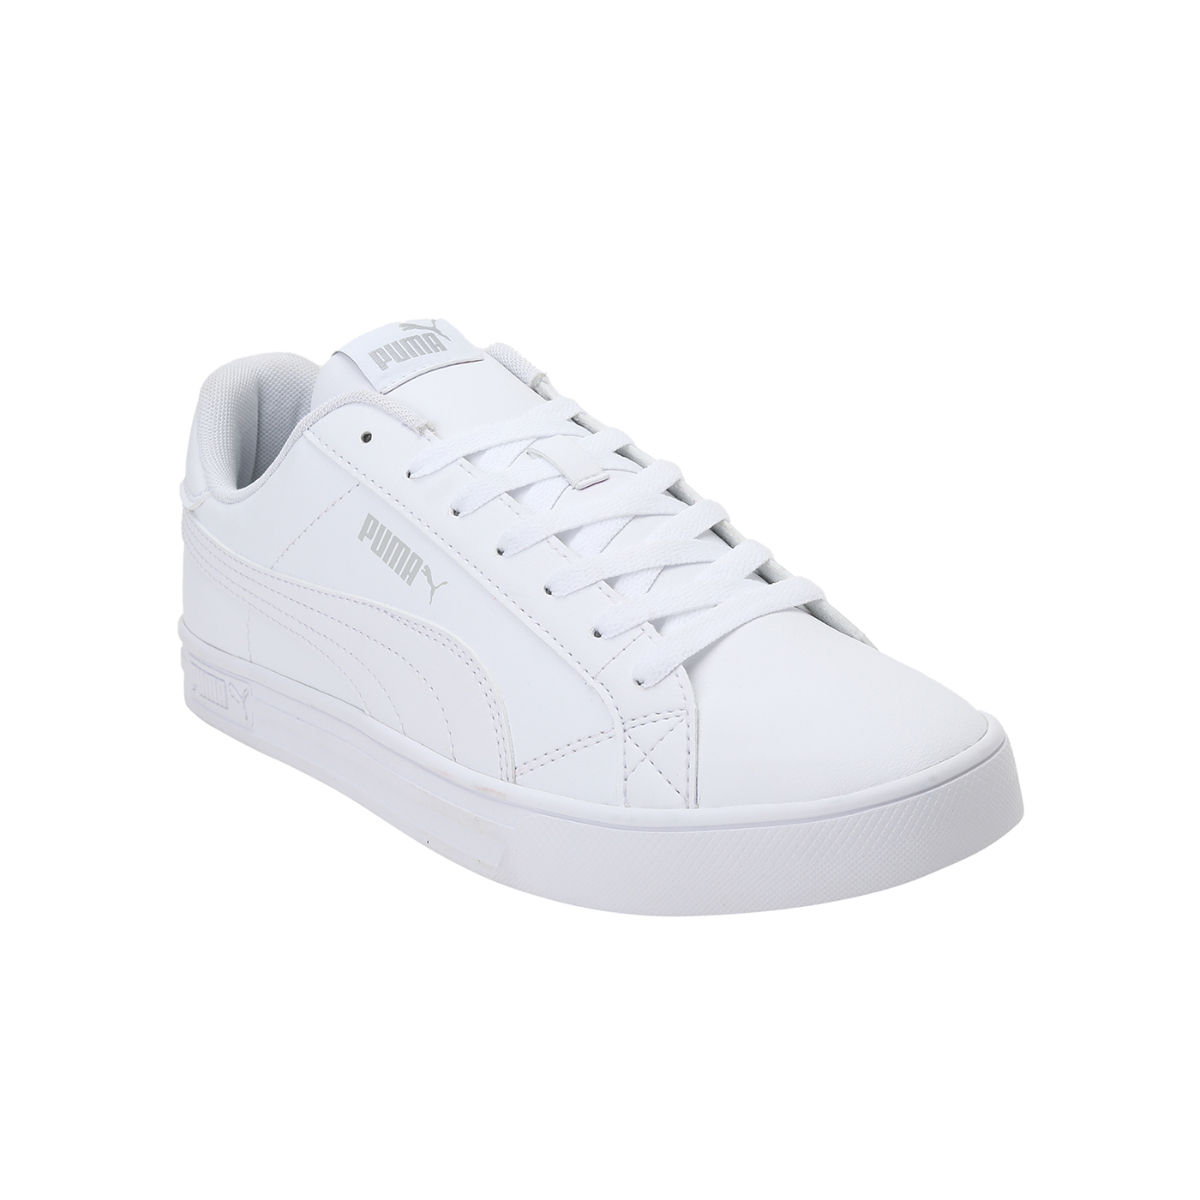 Puma Smash Vulc V3 LO Unisex White Casual Sneakers (UK 3): Buy Puma ...